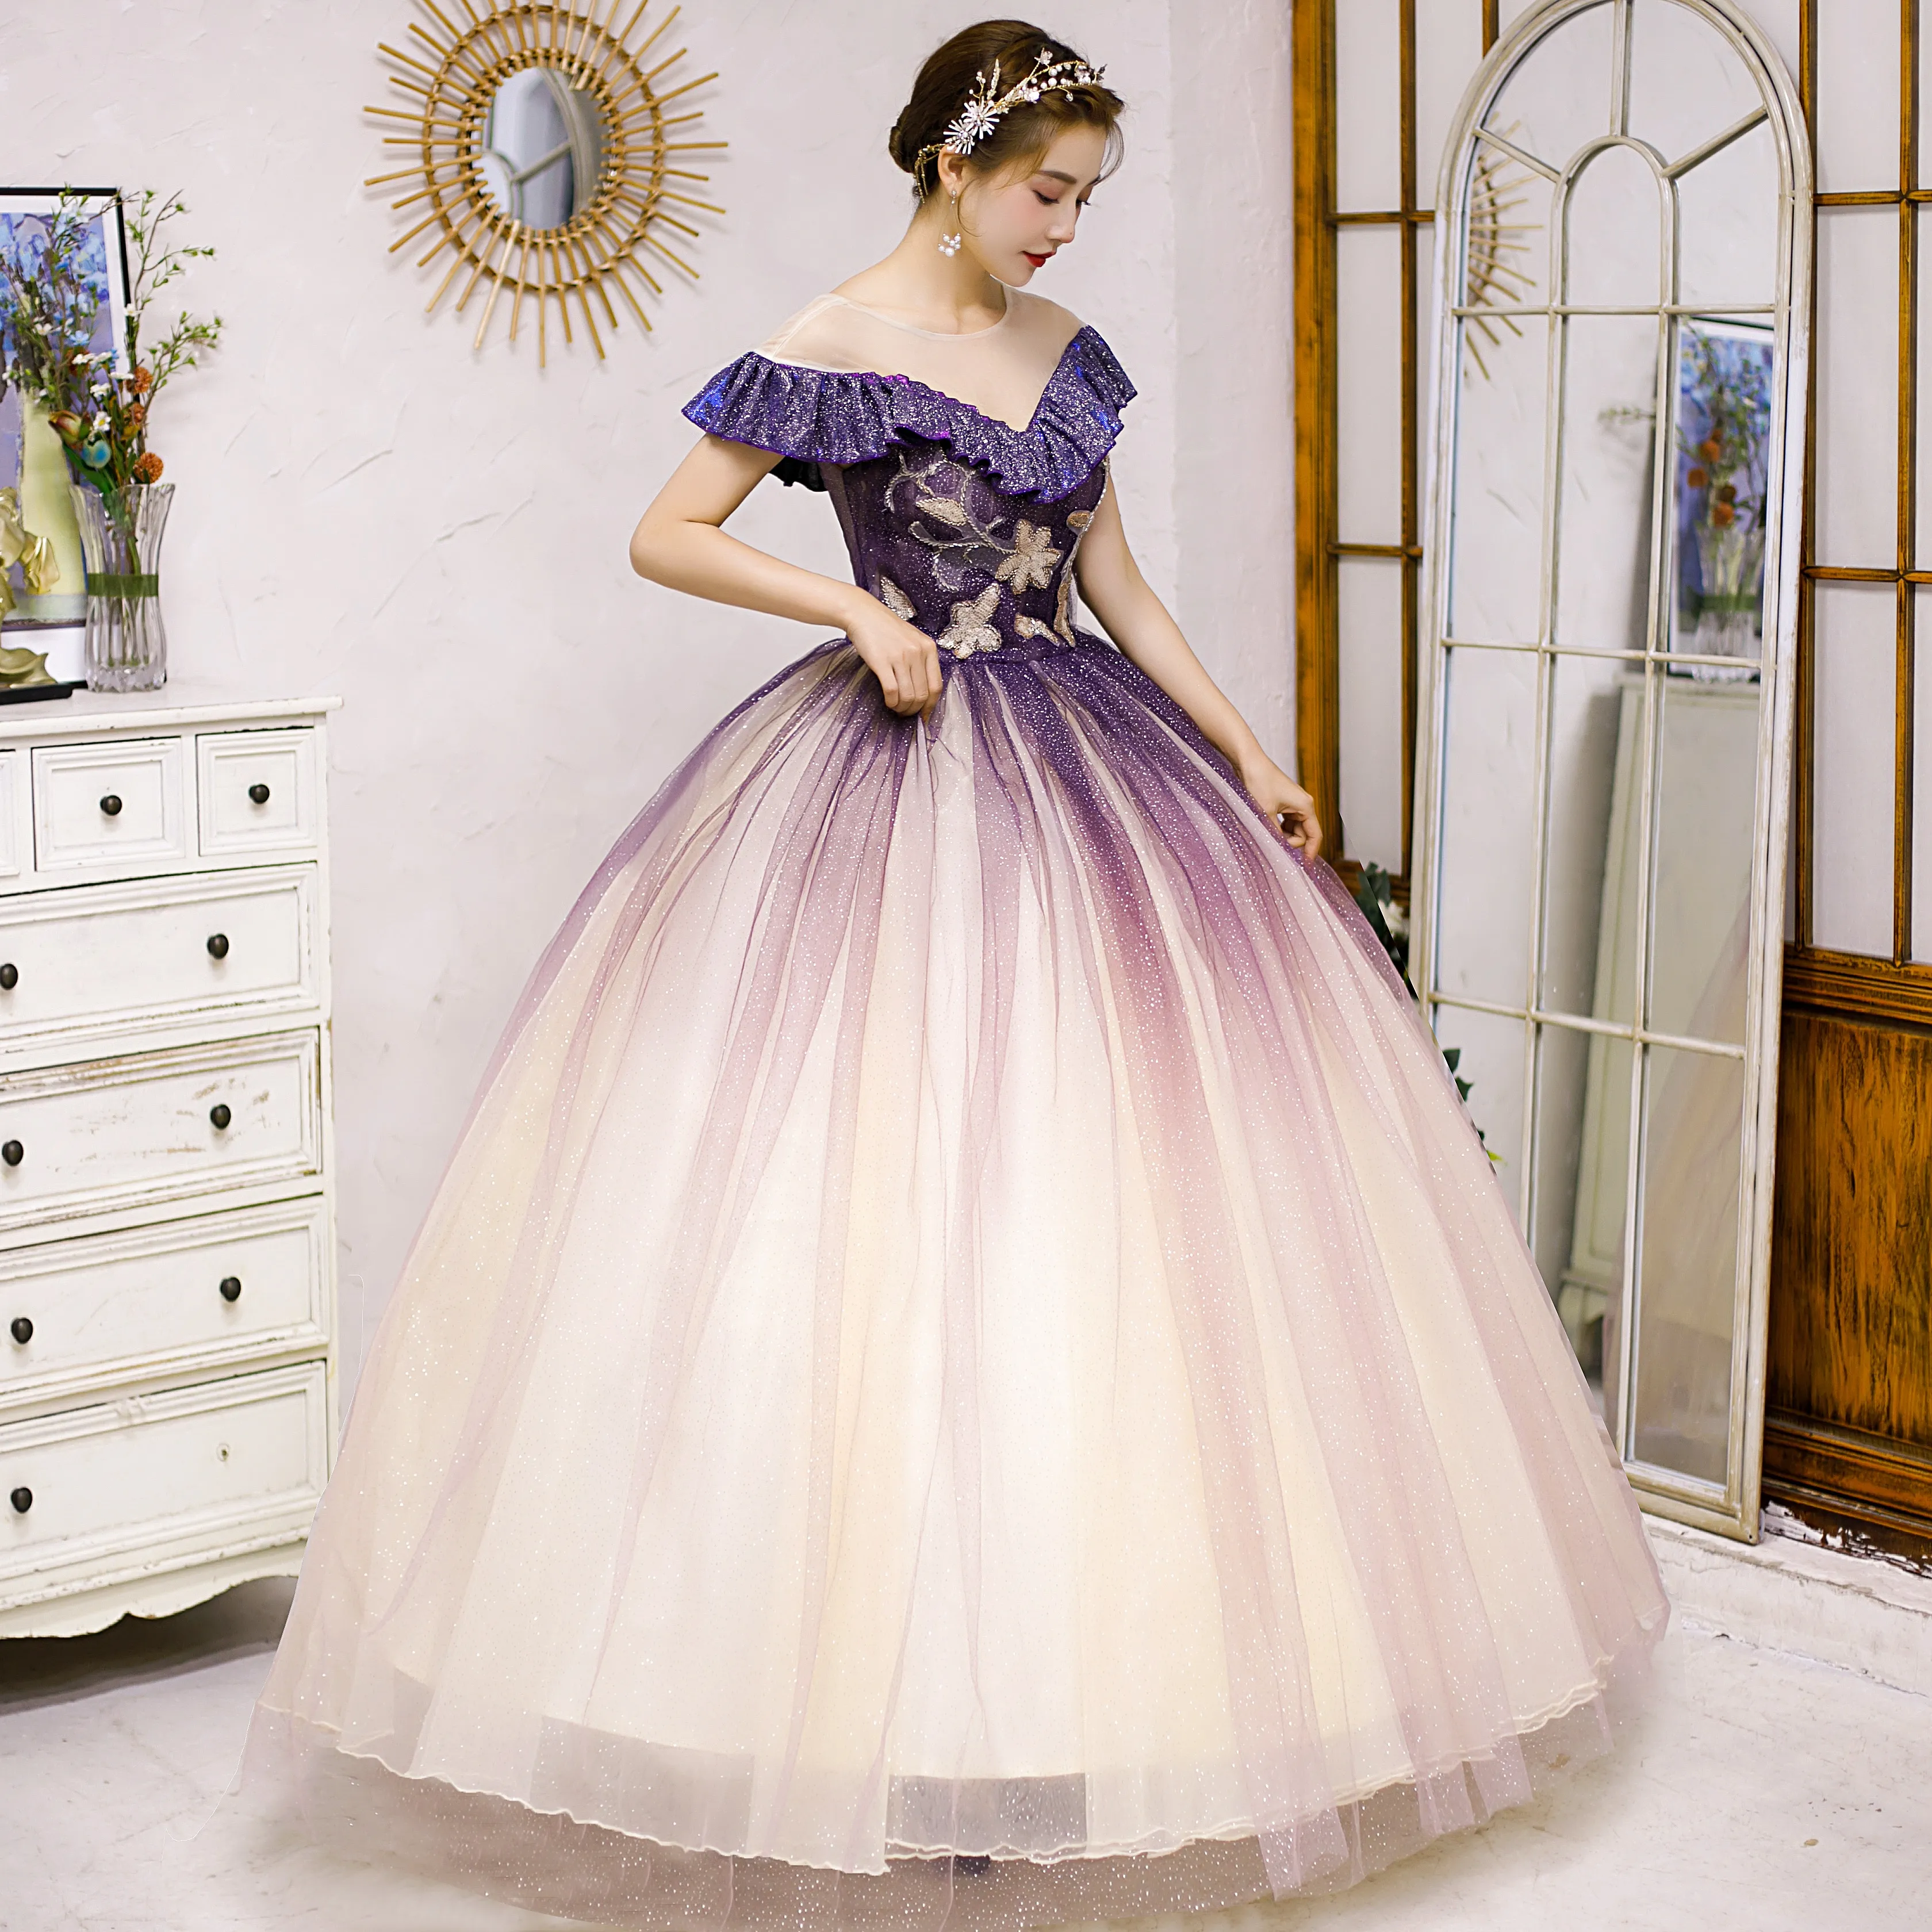 1220 Gold Princess Dress | Girls belle dress, Belle dress, Belle costume